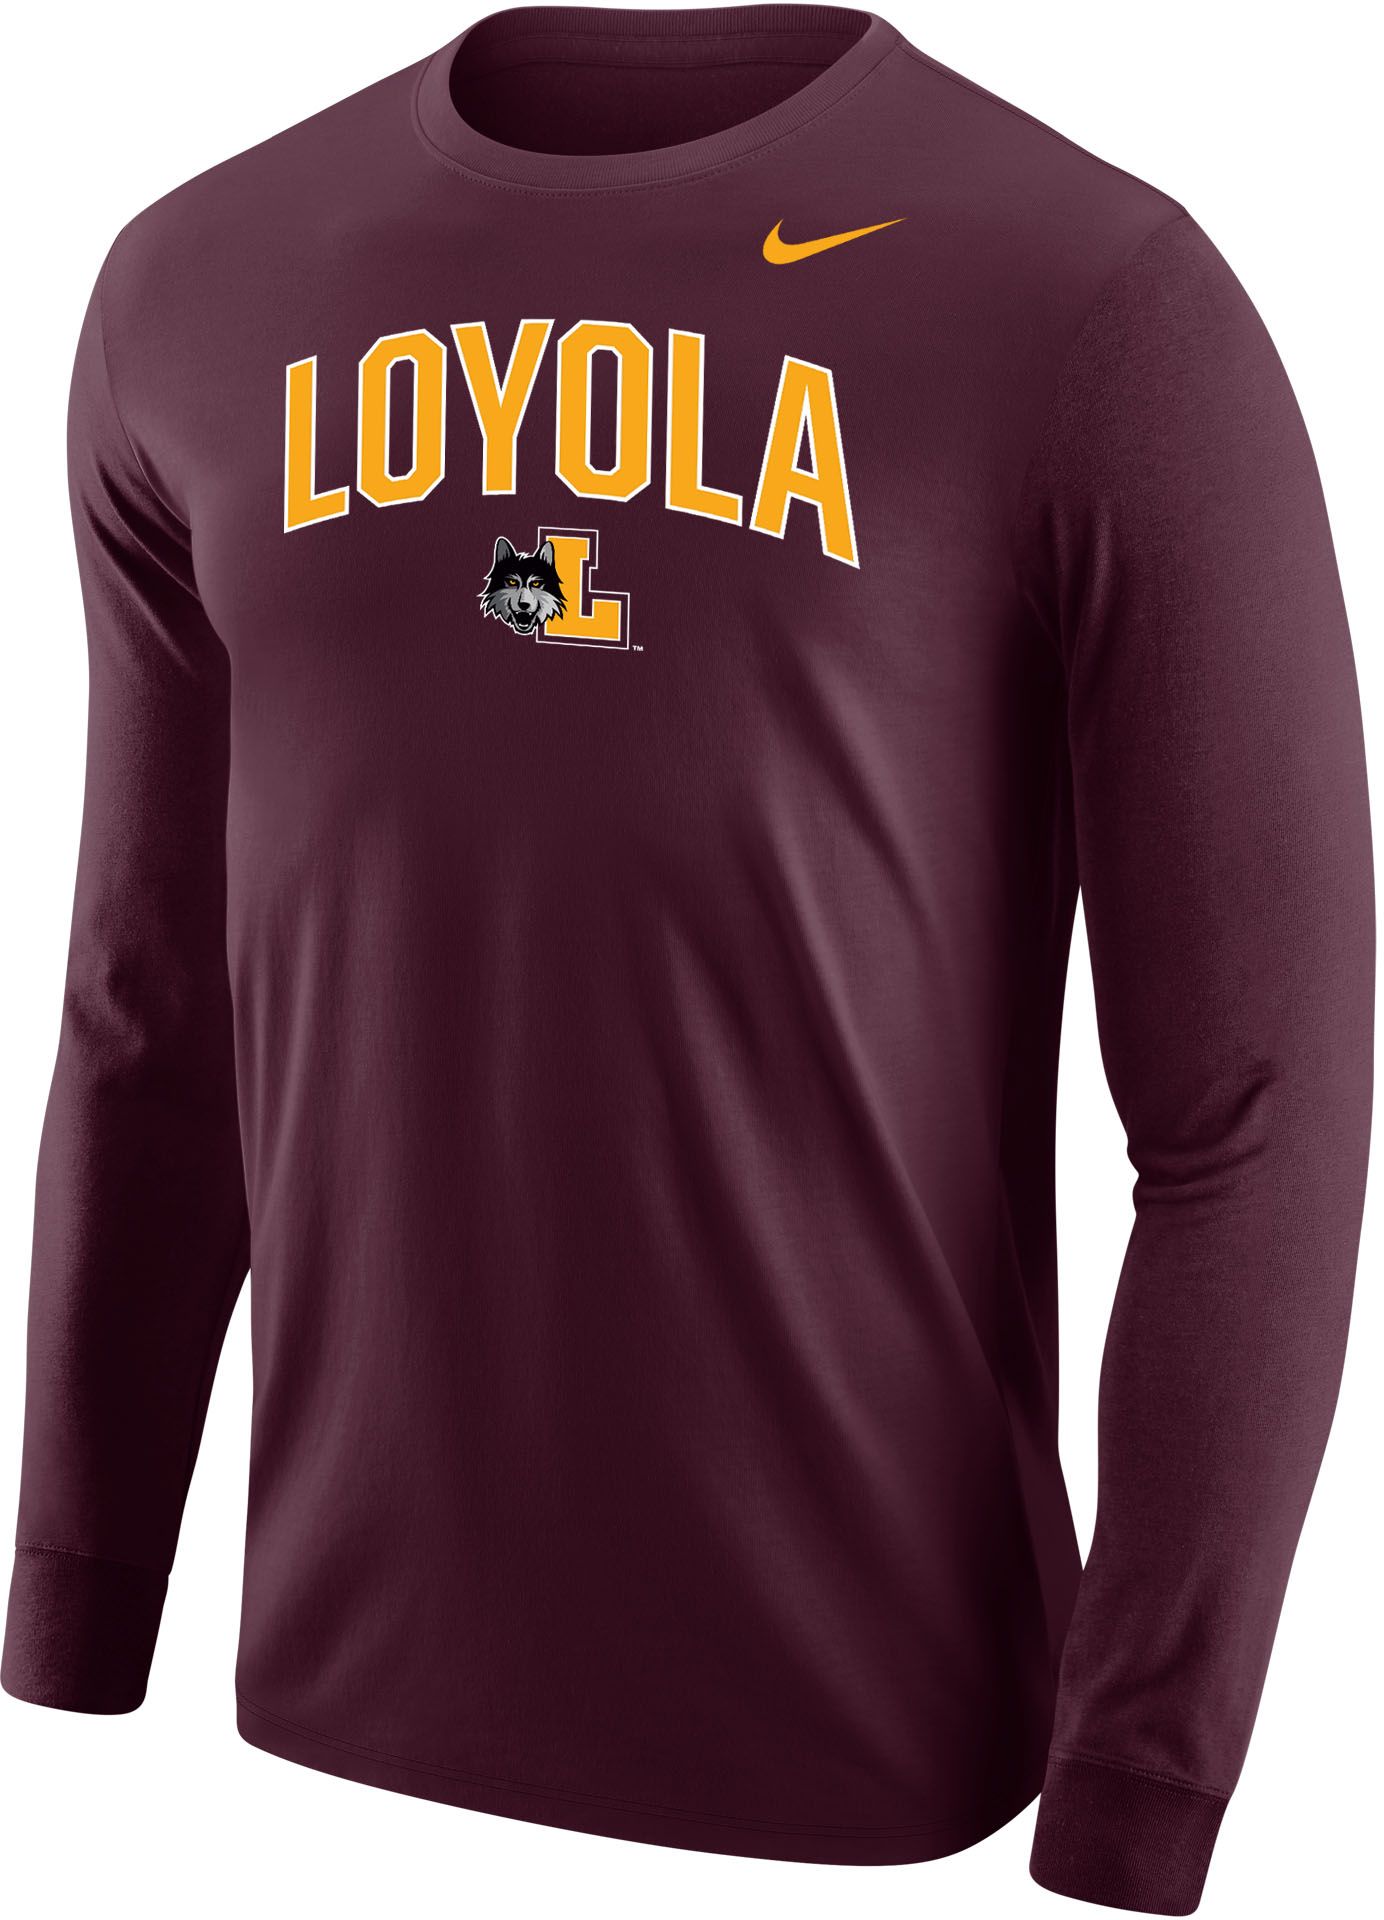 Loyola Chicago Ramblers NCAA jerseys